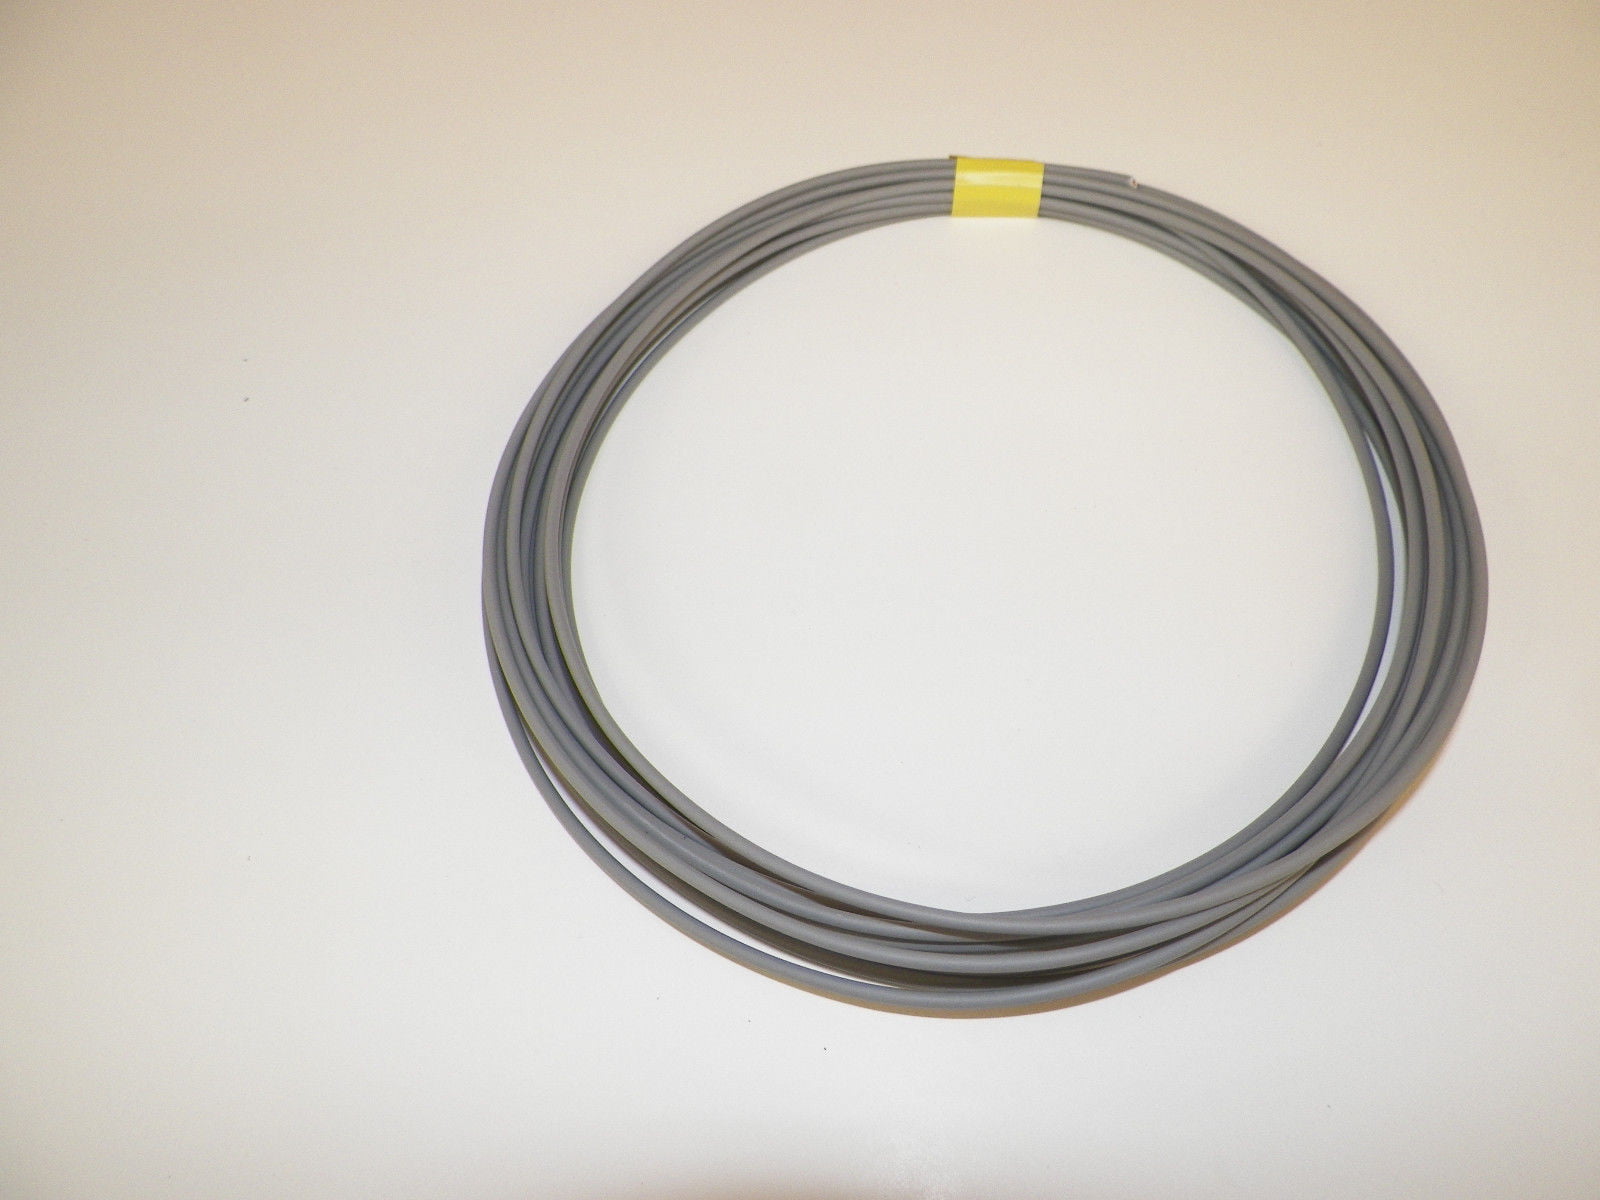 GXL BLACK Abrasion-Resistant General Purpose Wire 50 feet coil - 14 Ga 